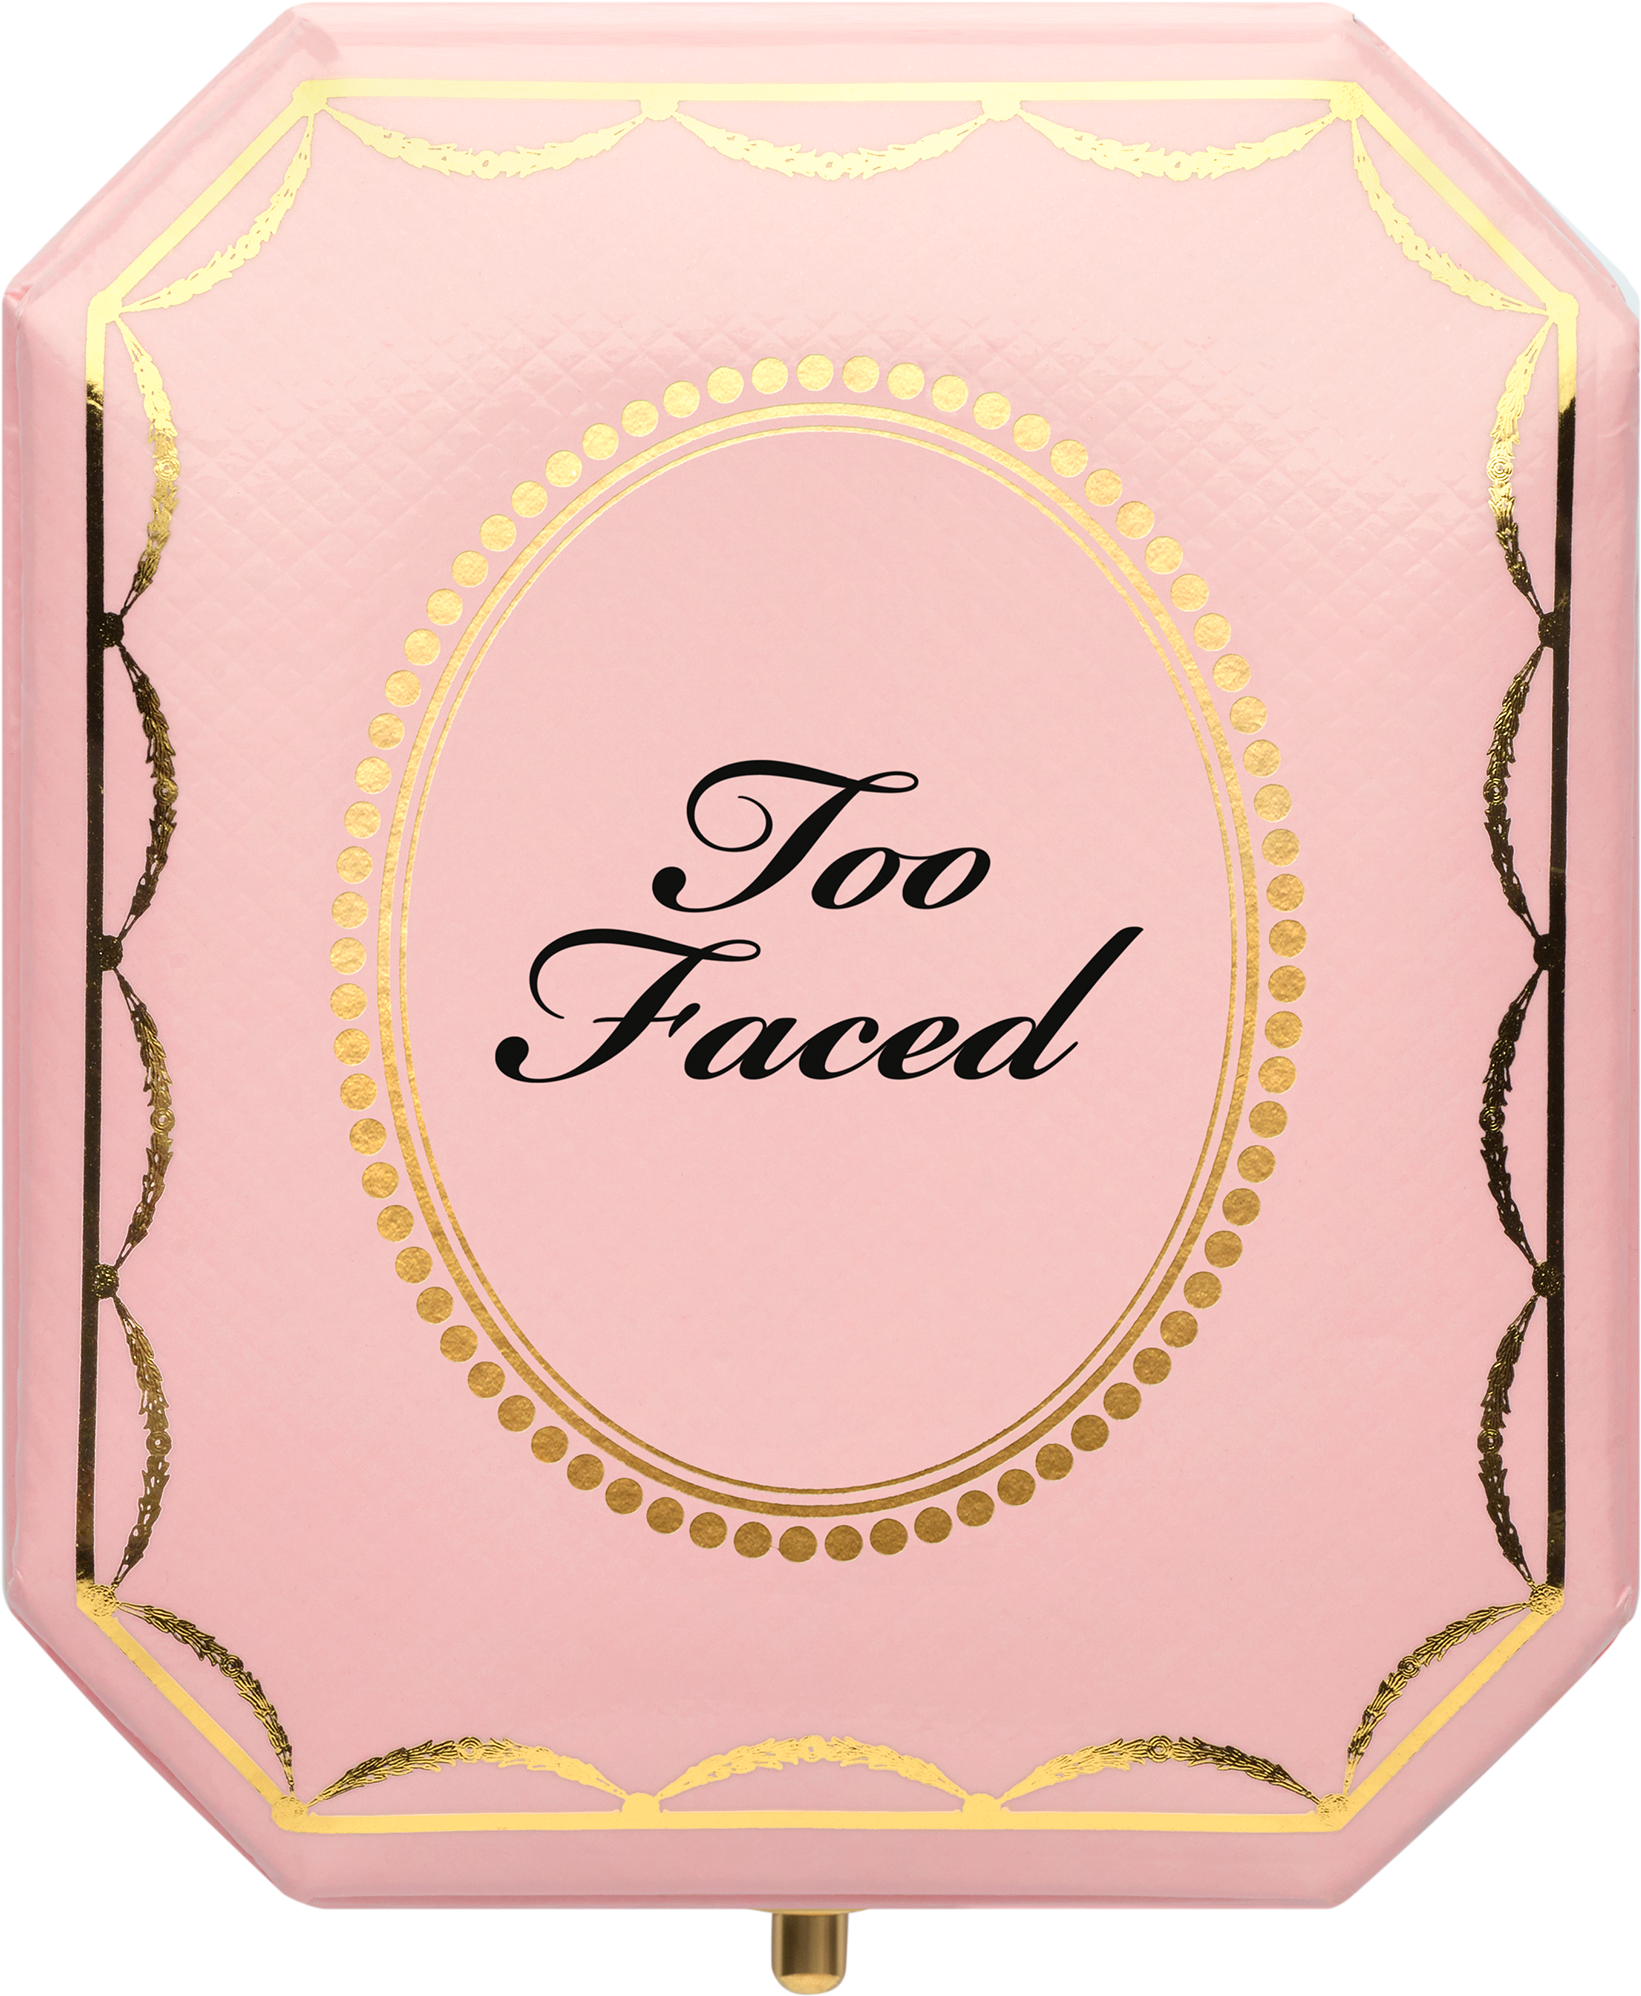 too faced cosmetics logo